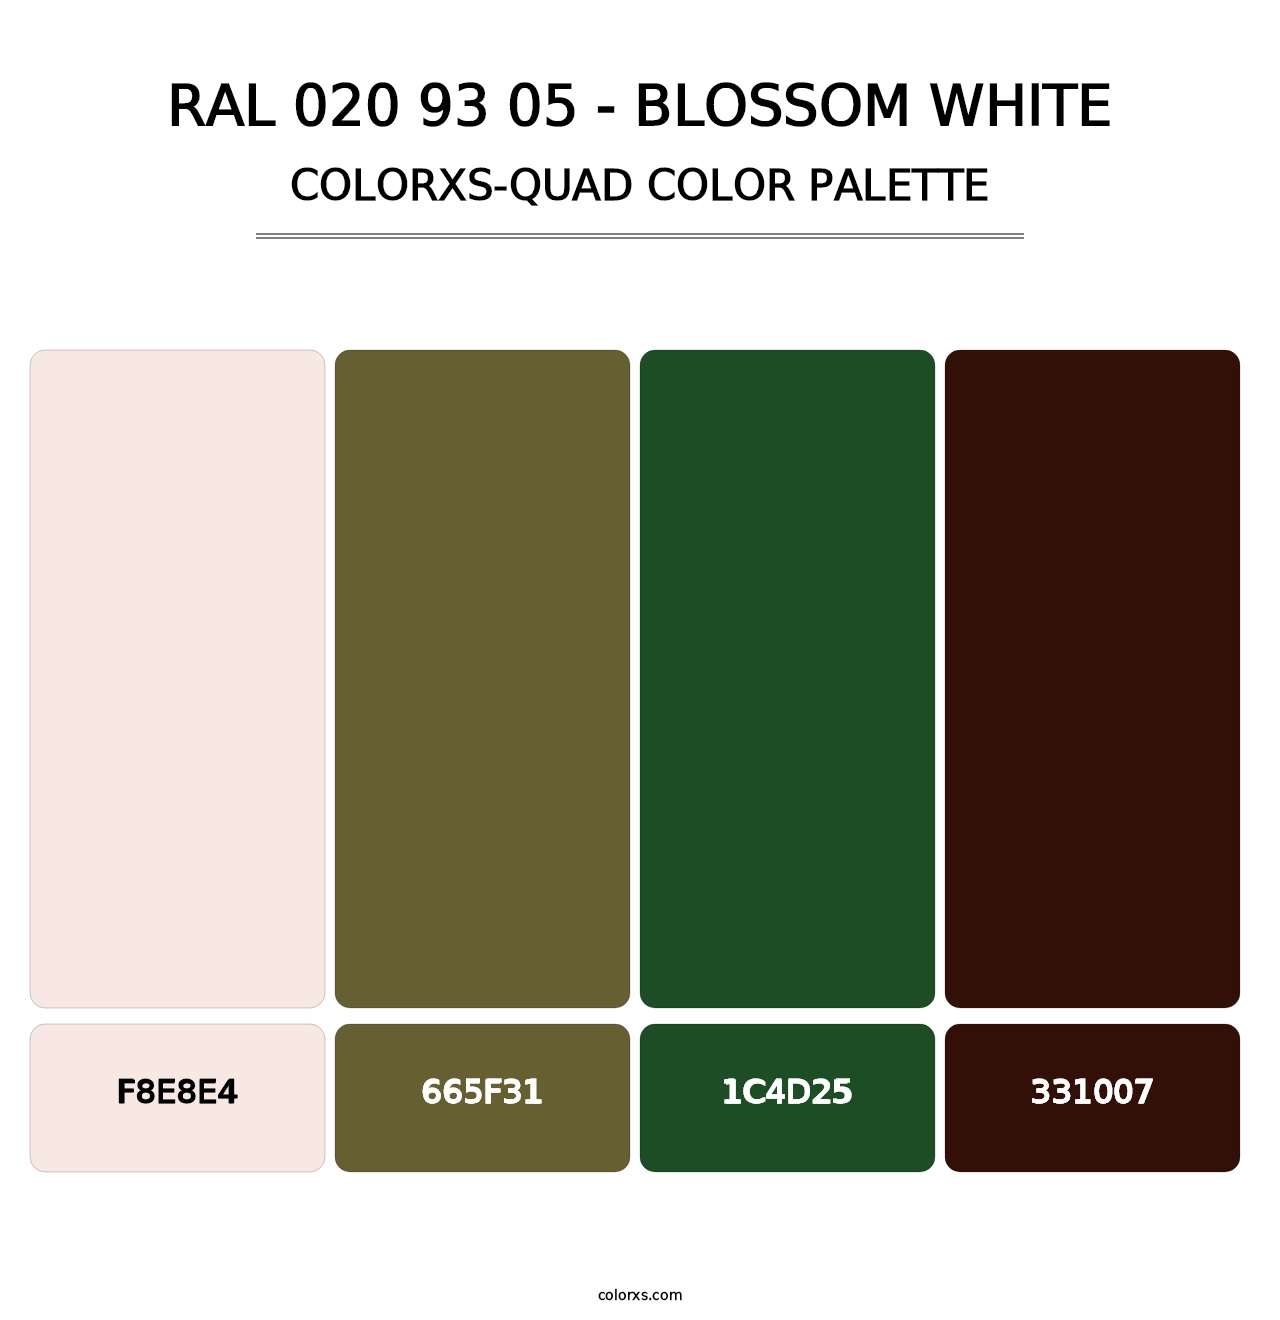 RAL 020 93 05 - Blossom White - Colorxs Quad Palette